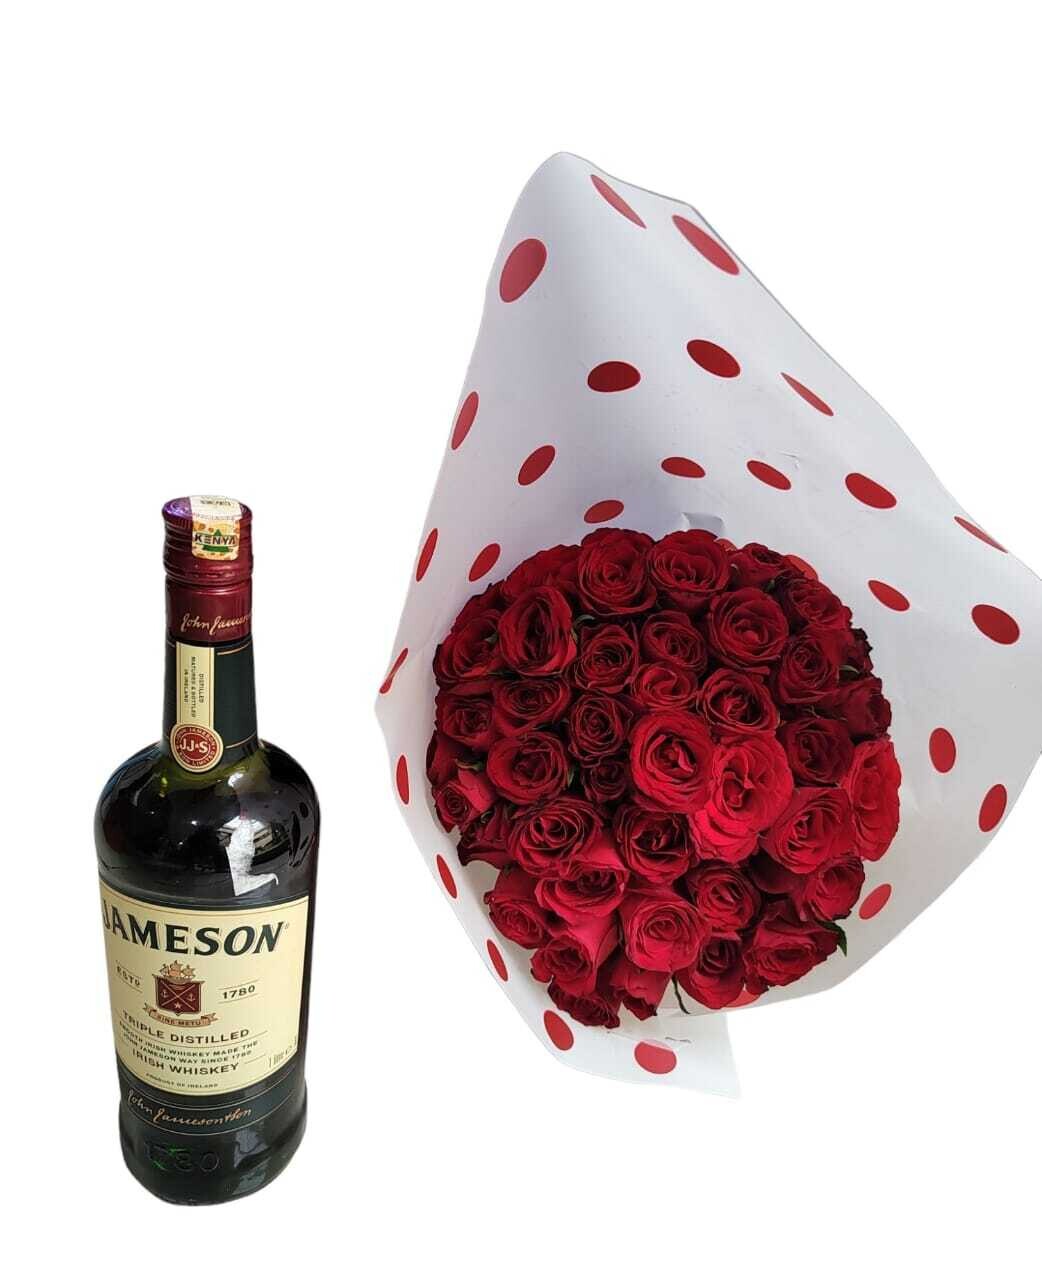 Romantic gift flowers & jameson wiskey